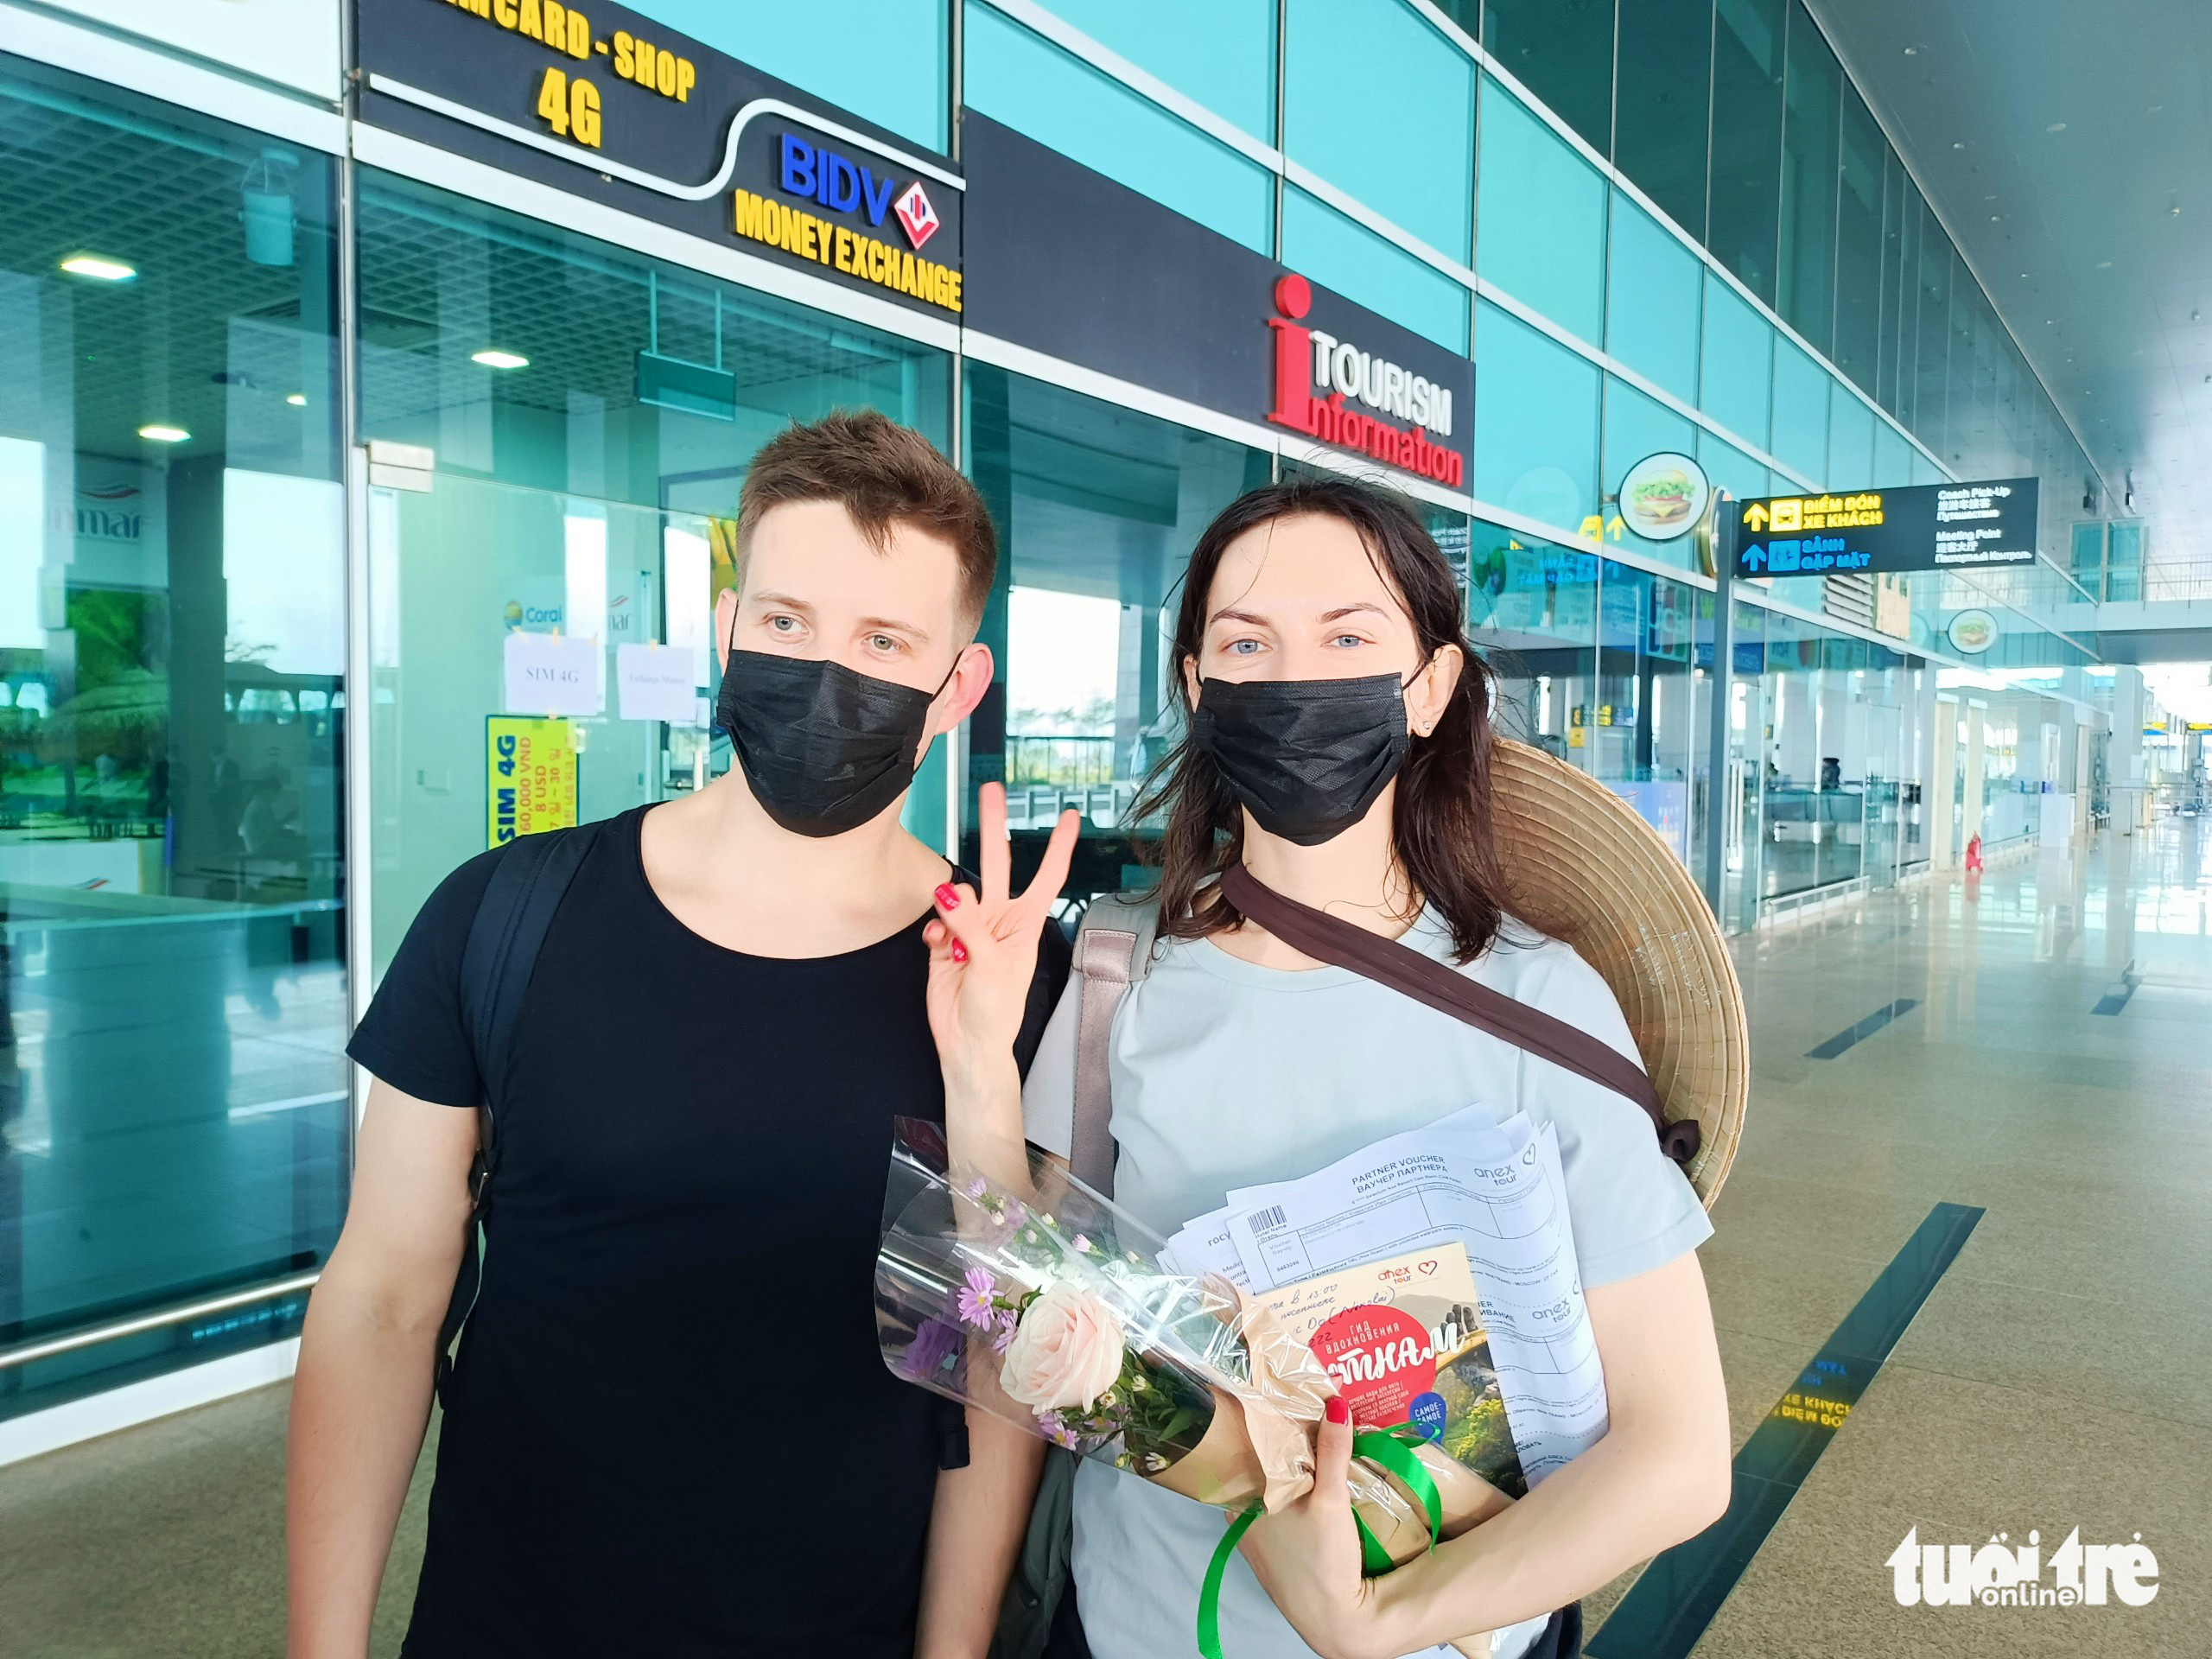 Semennikova Viktoria (right) poses for a photo upon her arrival at Cam Ranh International Airport in Khanh Hoa Province, Vietnam, December 26, 2021. Photo: Minh Chien / Tuoi Tre